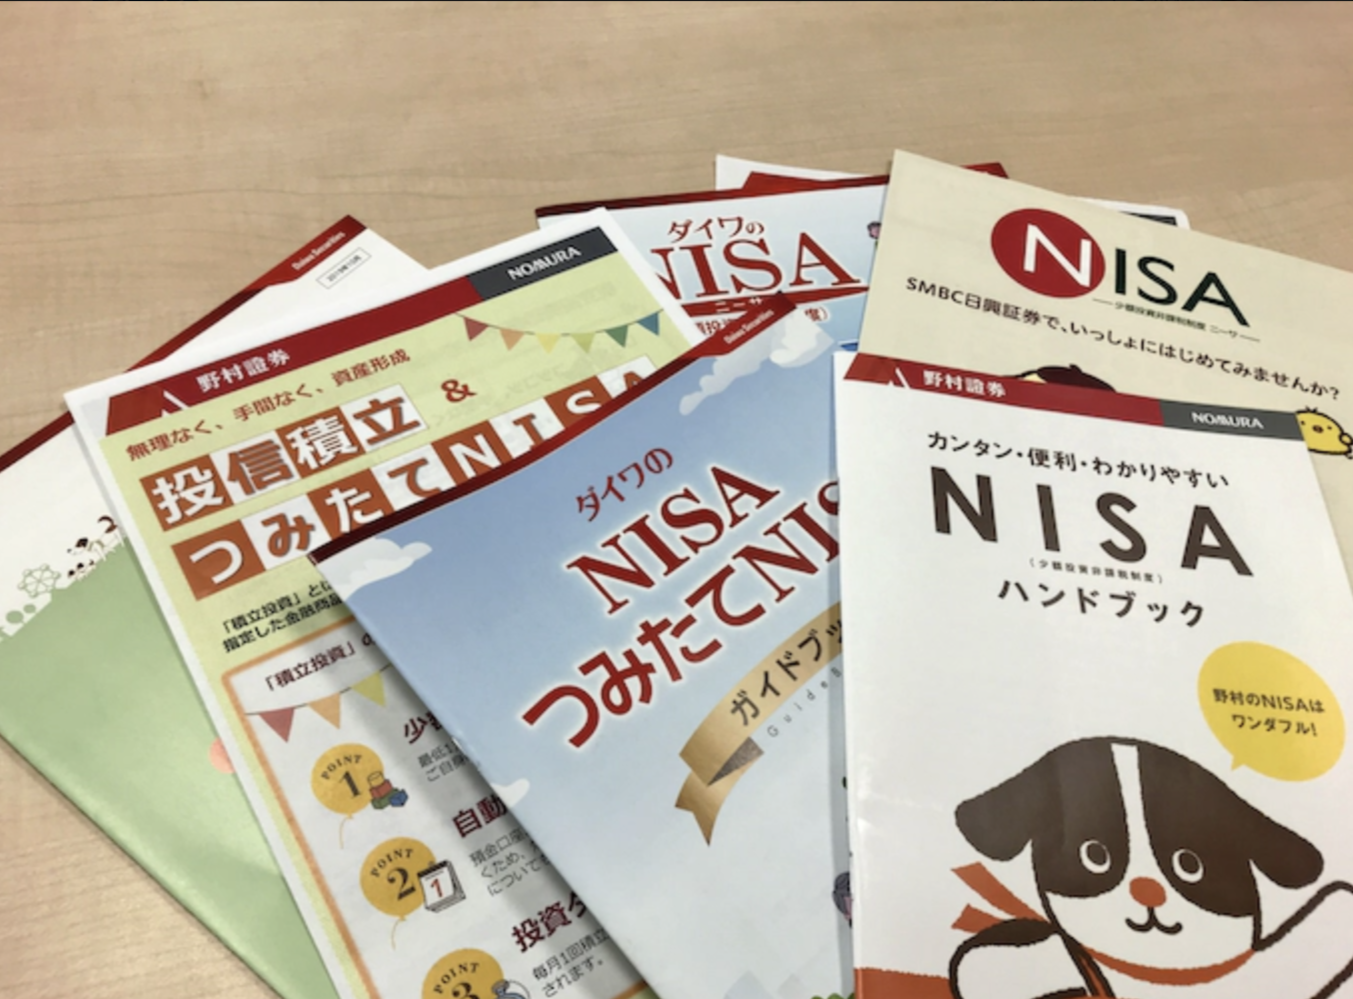 NISA】新NISA年間投資額360万円・投資上限1,800万円 | 低予算海外フル